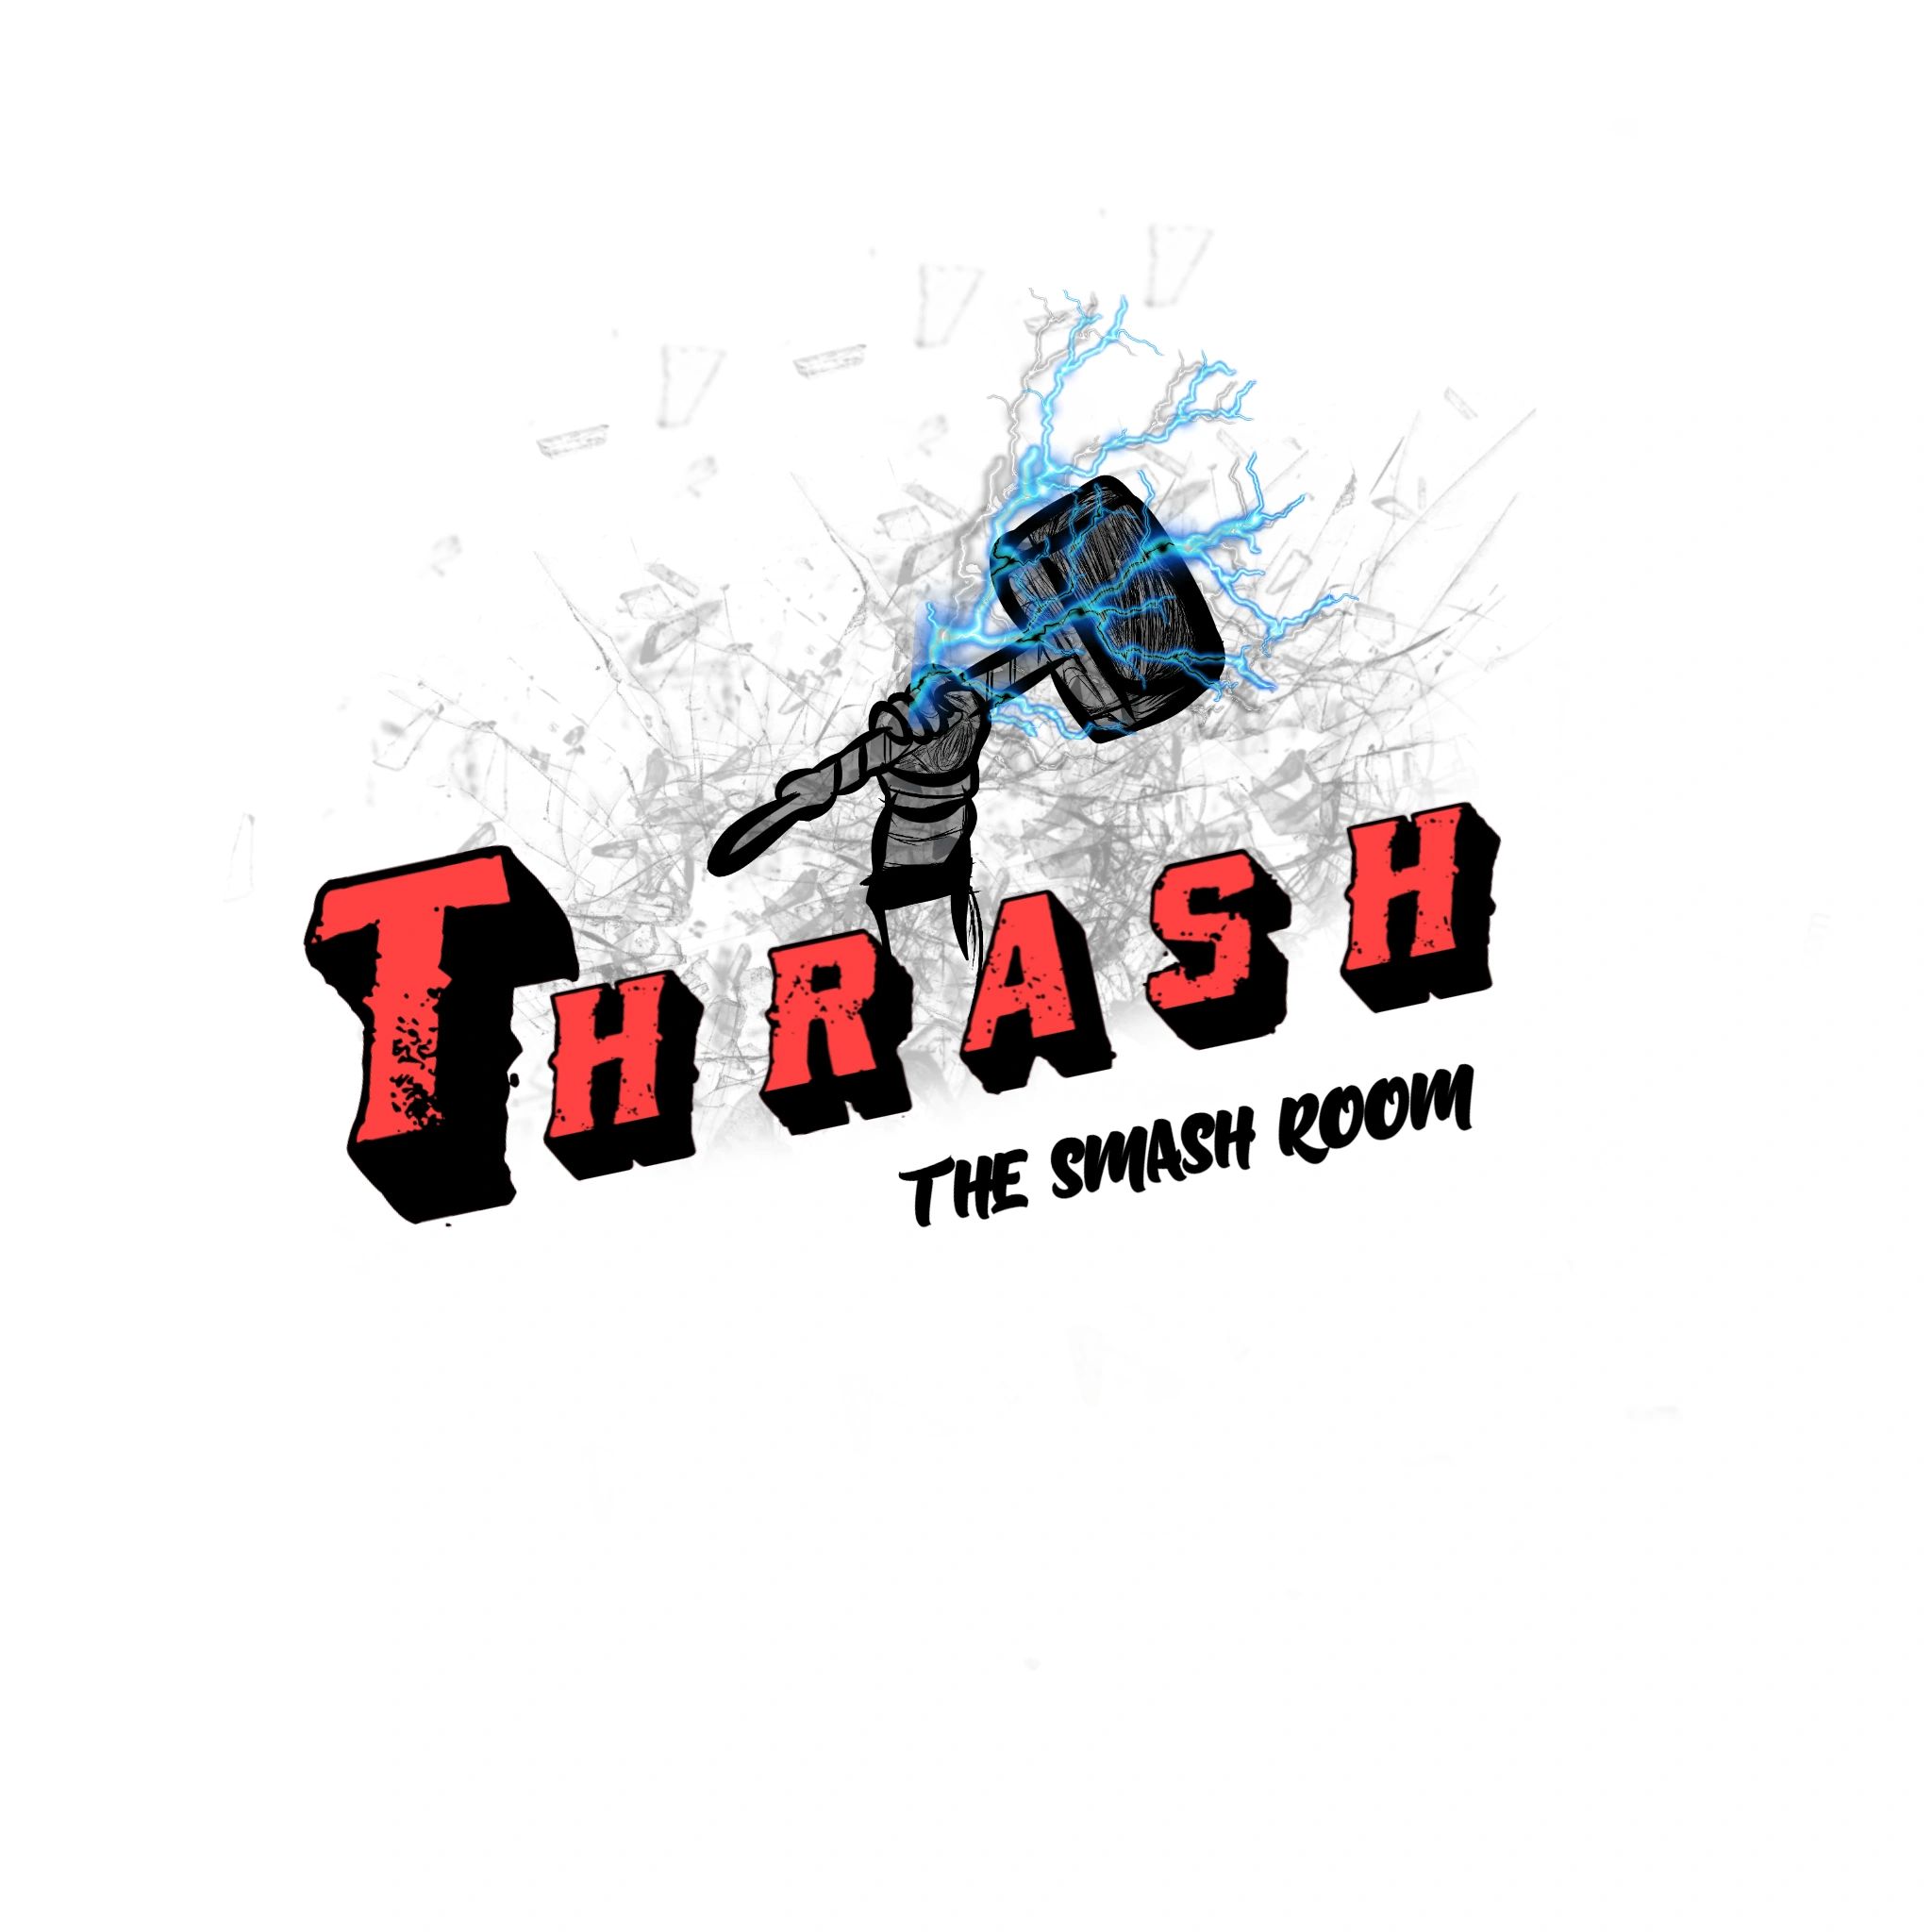 Thrash
Smash Room
Stress Relief
Empowerment
Rage Room
Destroy Room